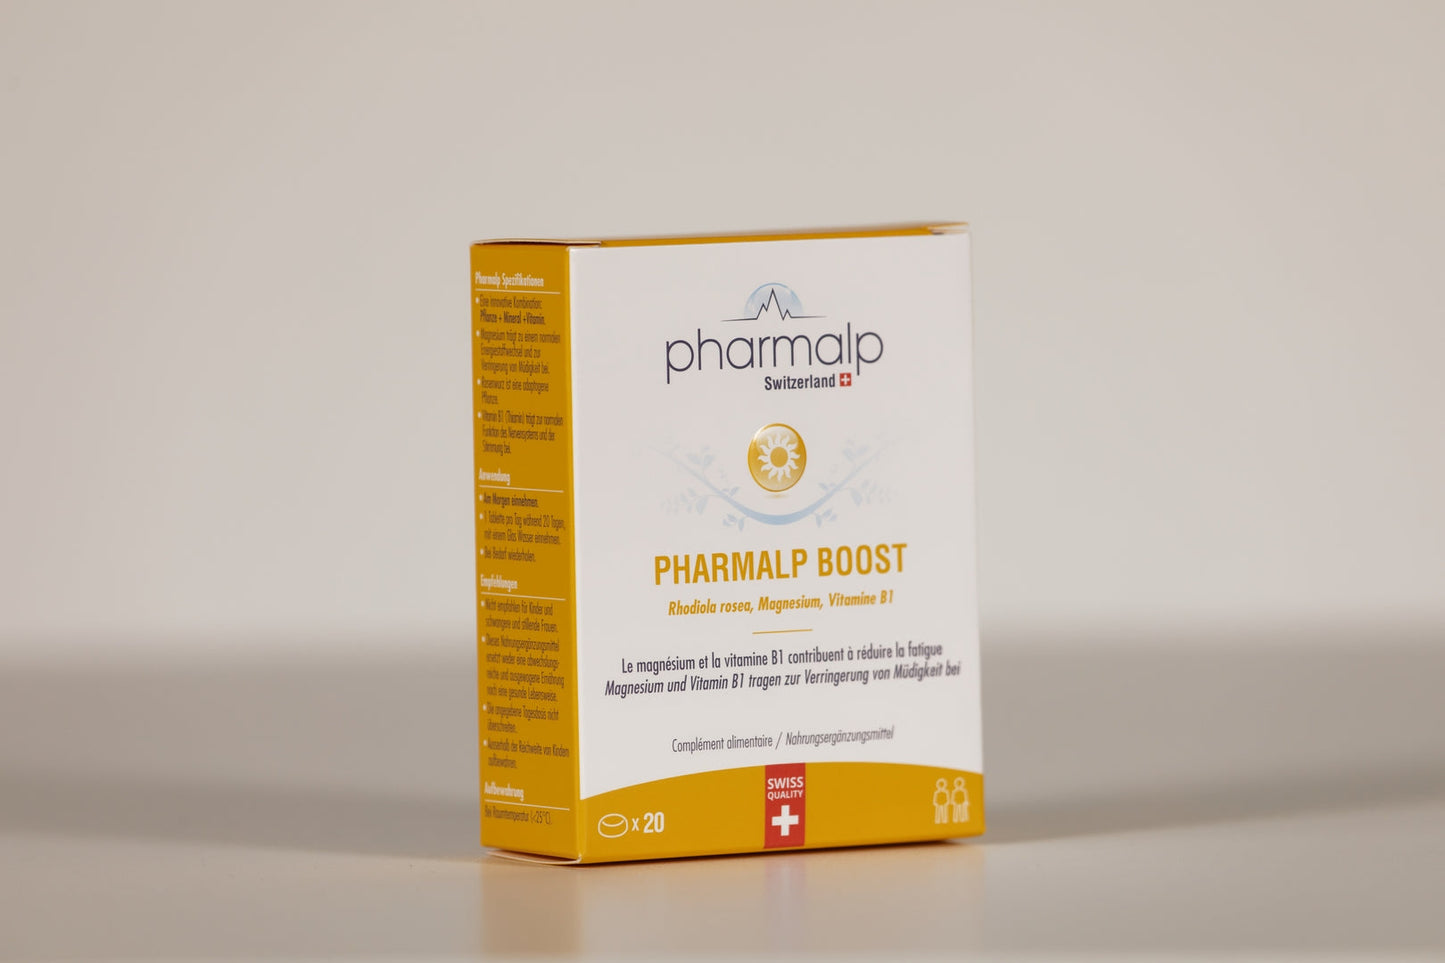 PHARMALP BOOST (20 tab, Rhodiola, Mg and Vit B1)